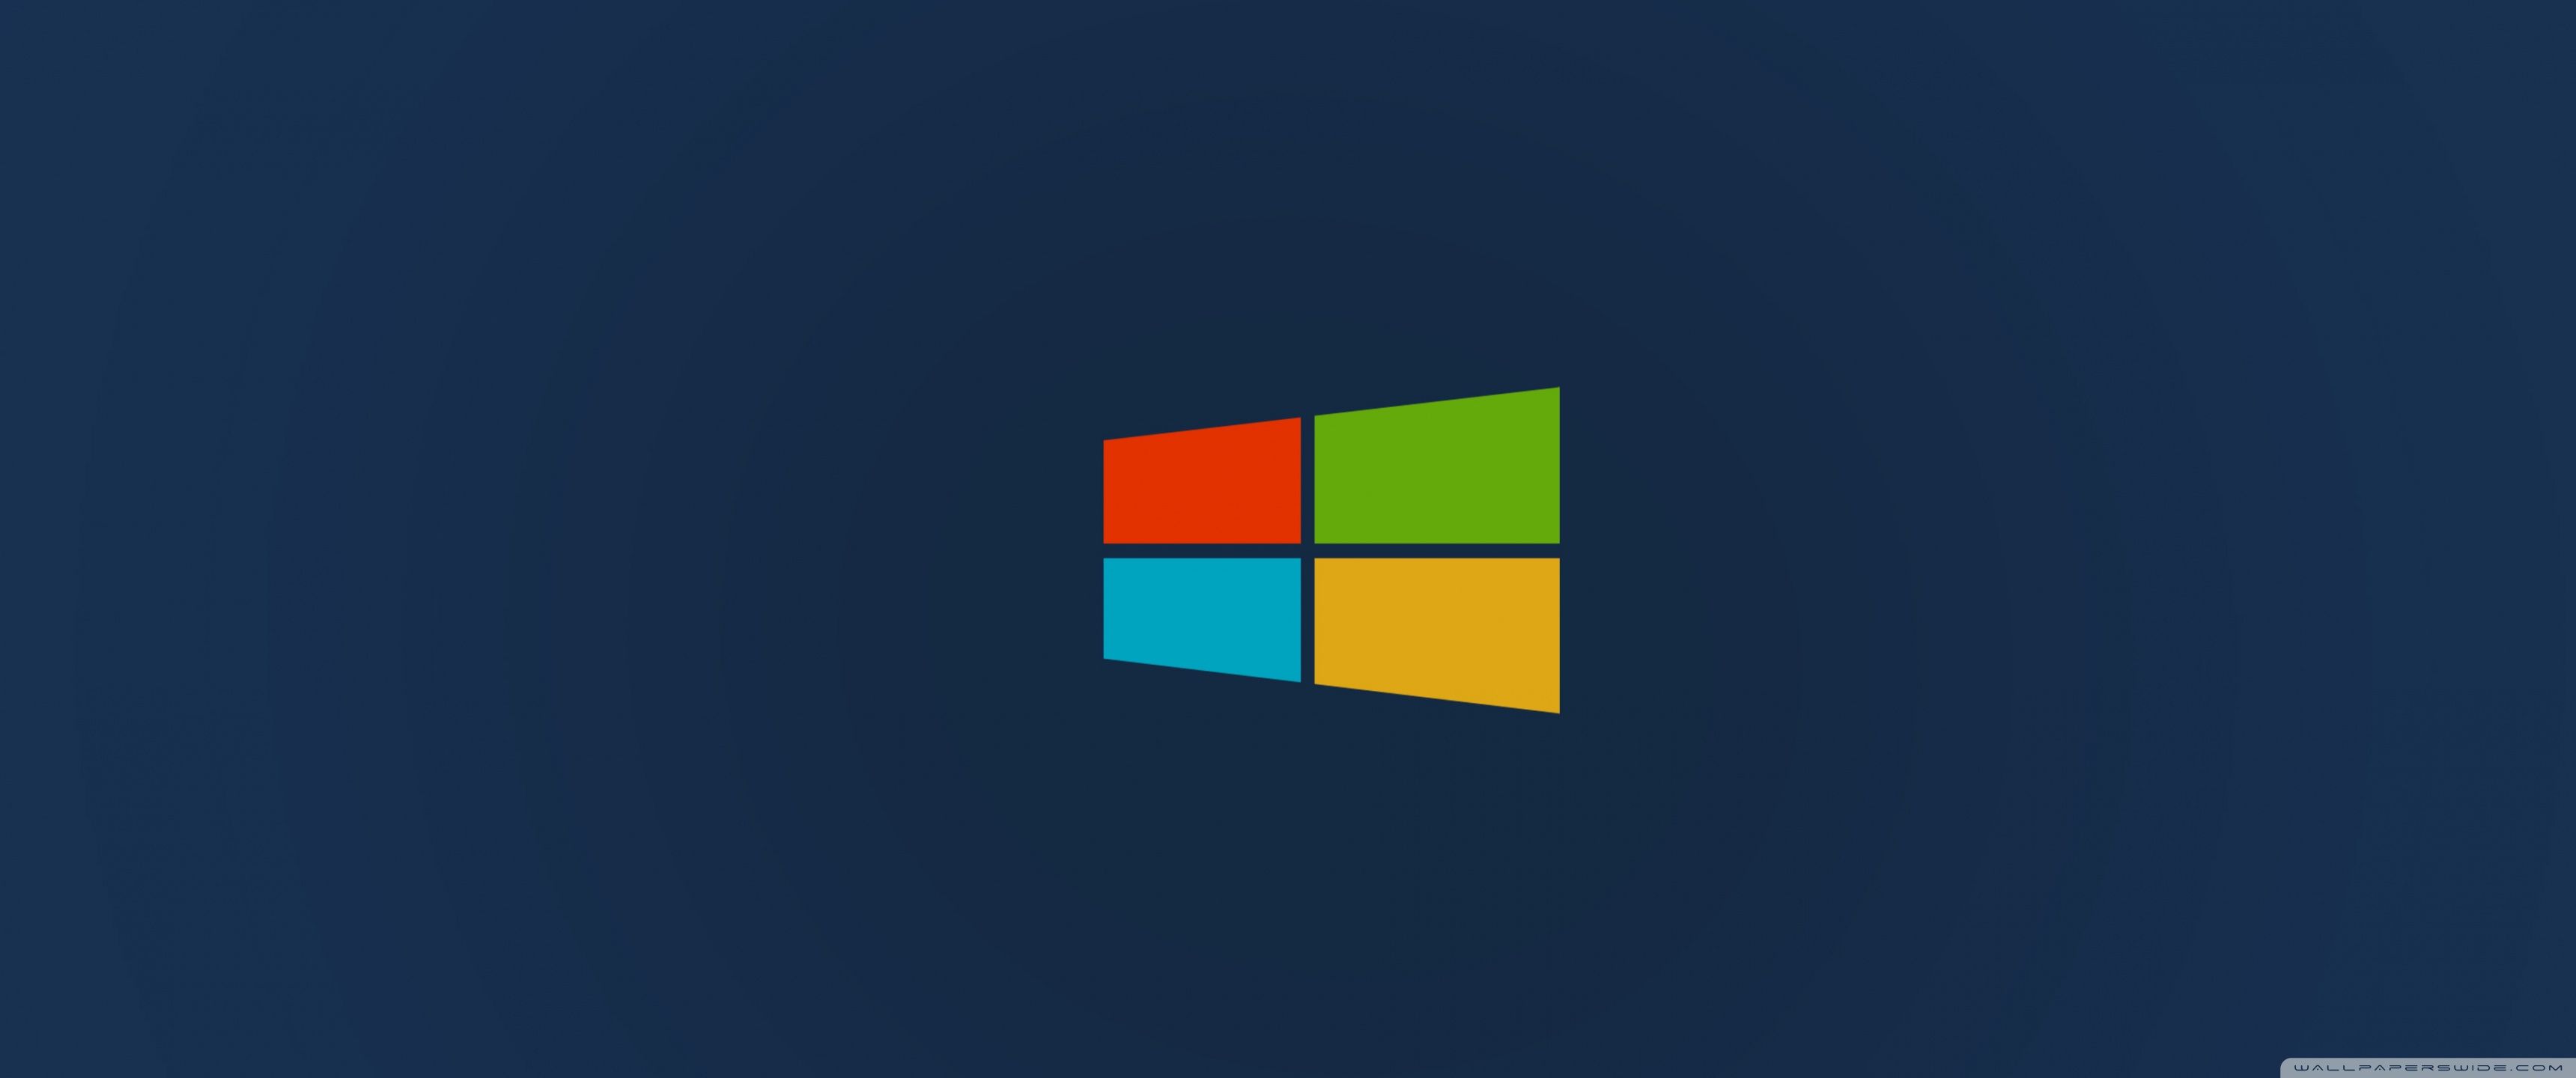 Windows 10 Wallpaper 3440 X 1440